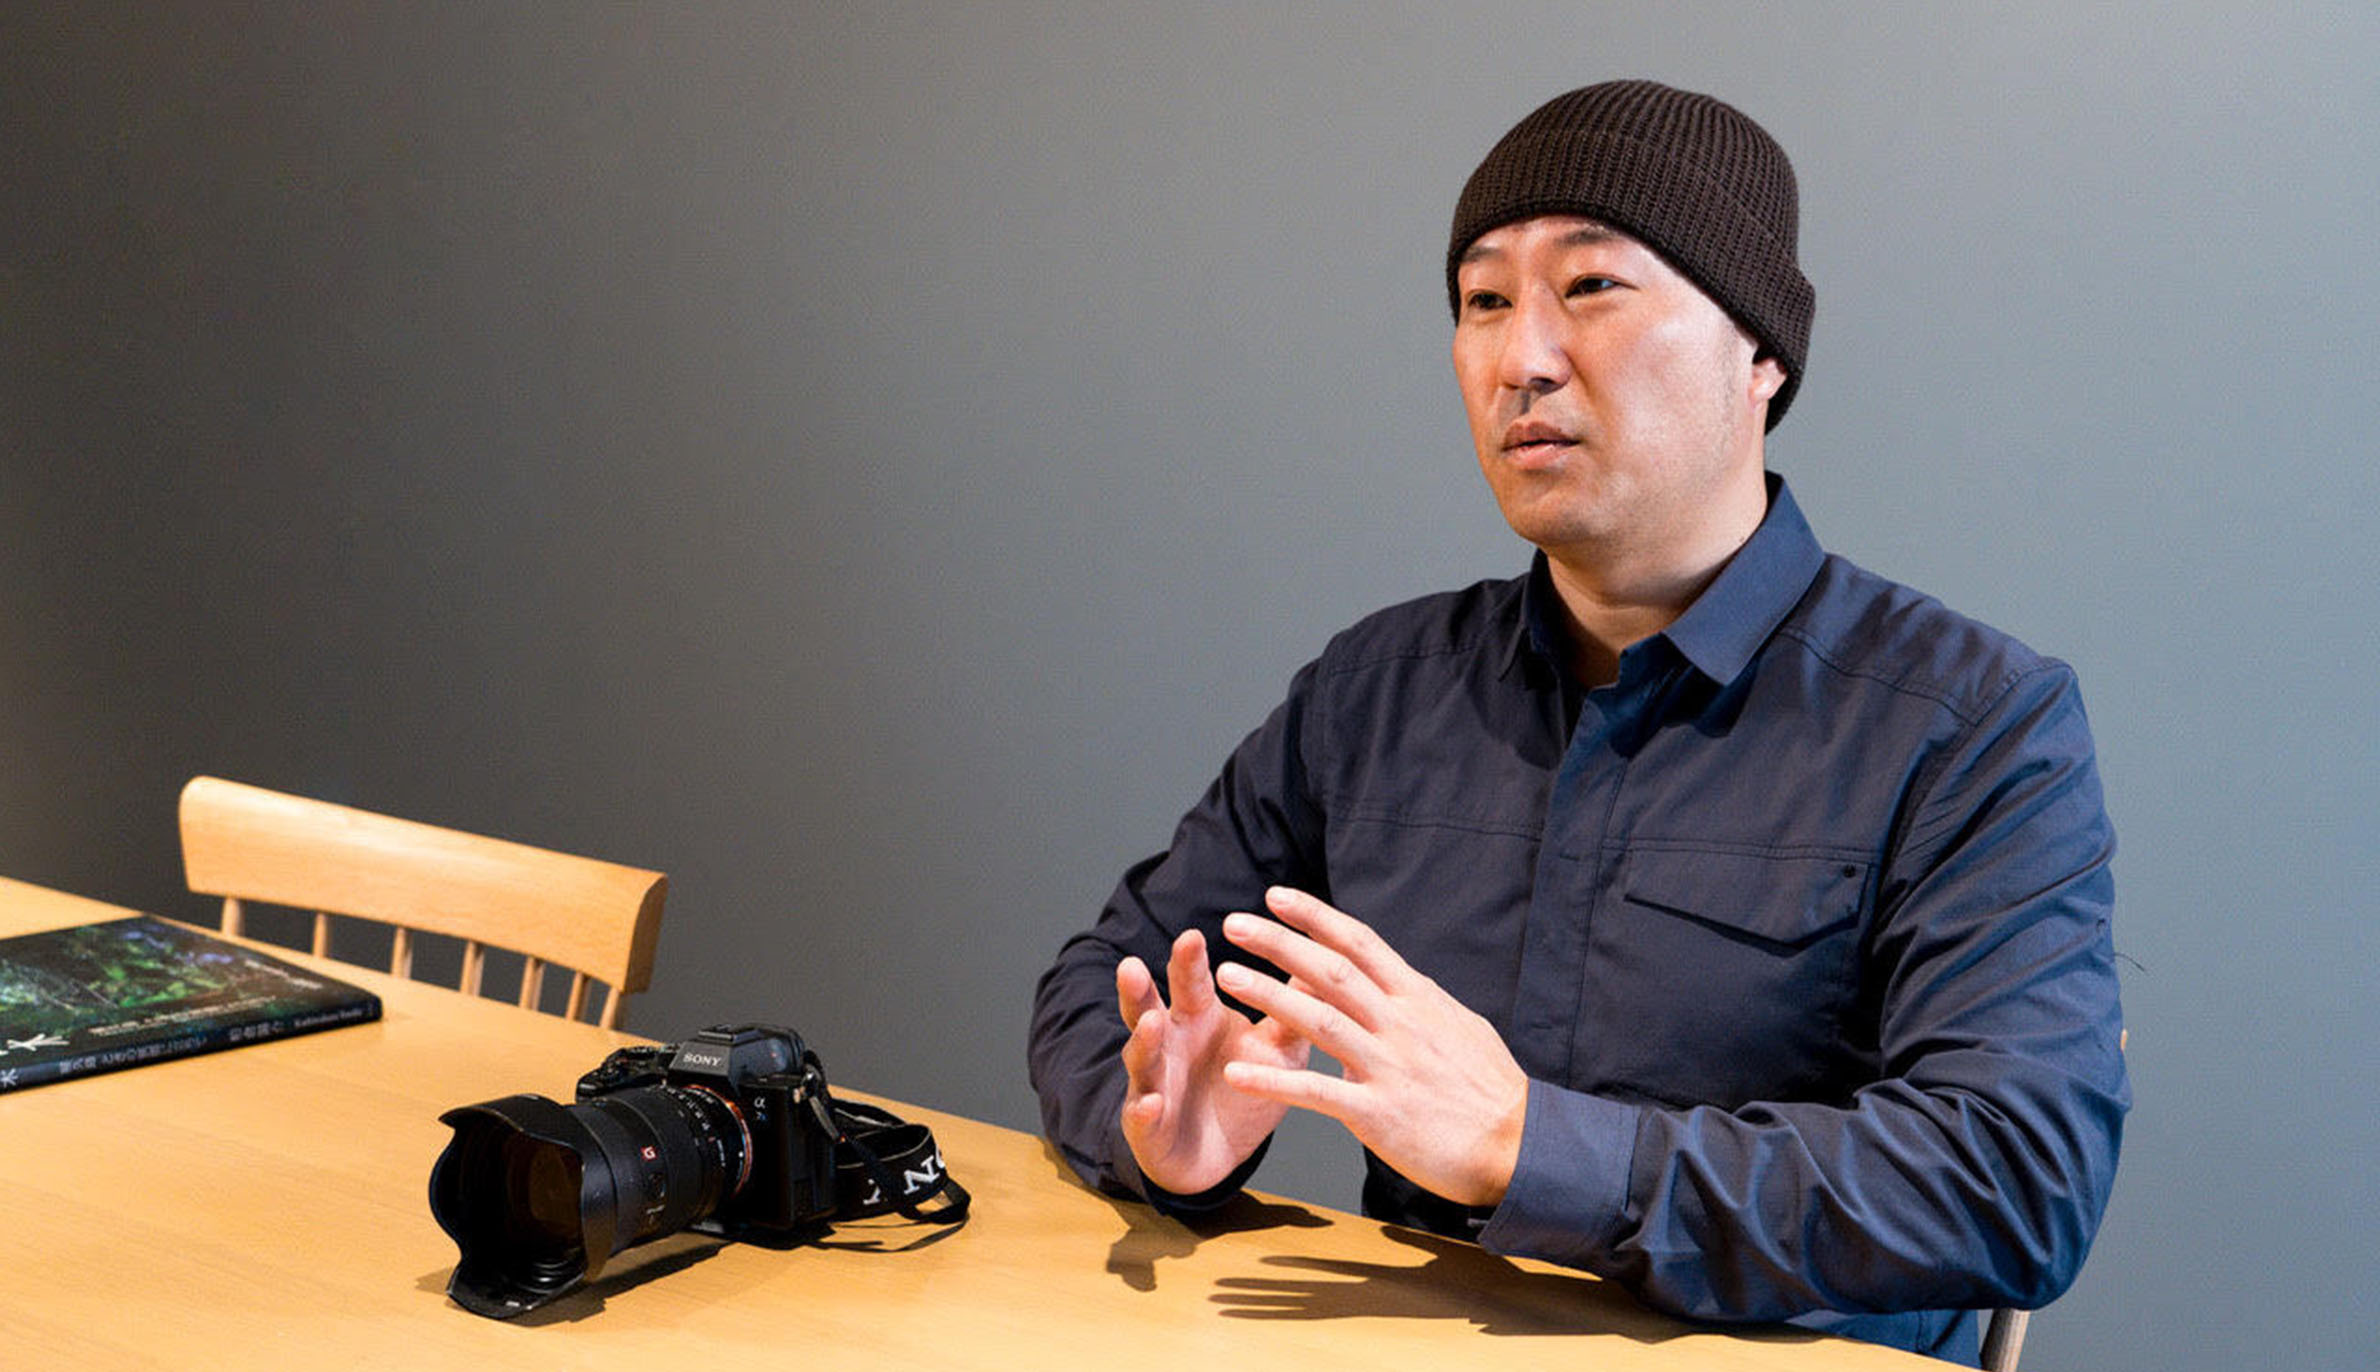 A photograph of Kashiwakura taken during the interview